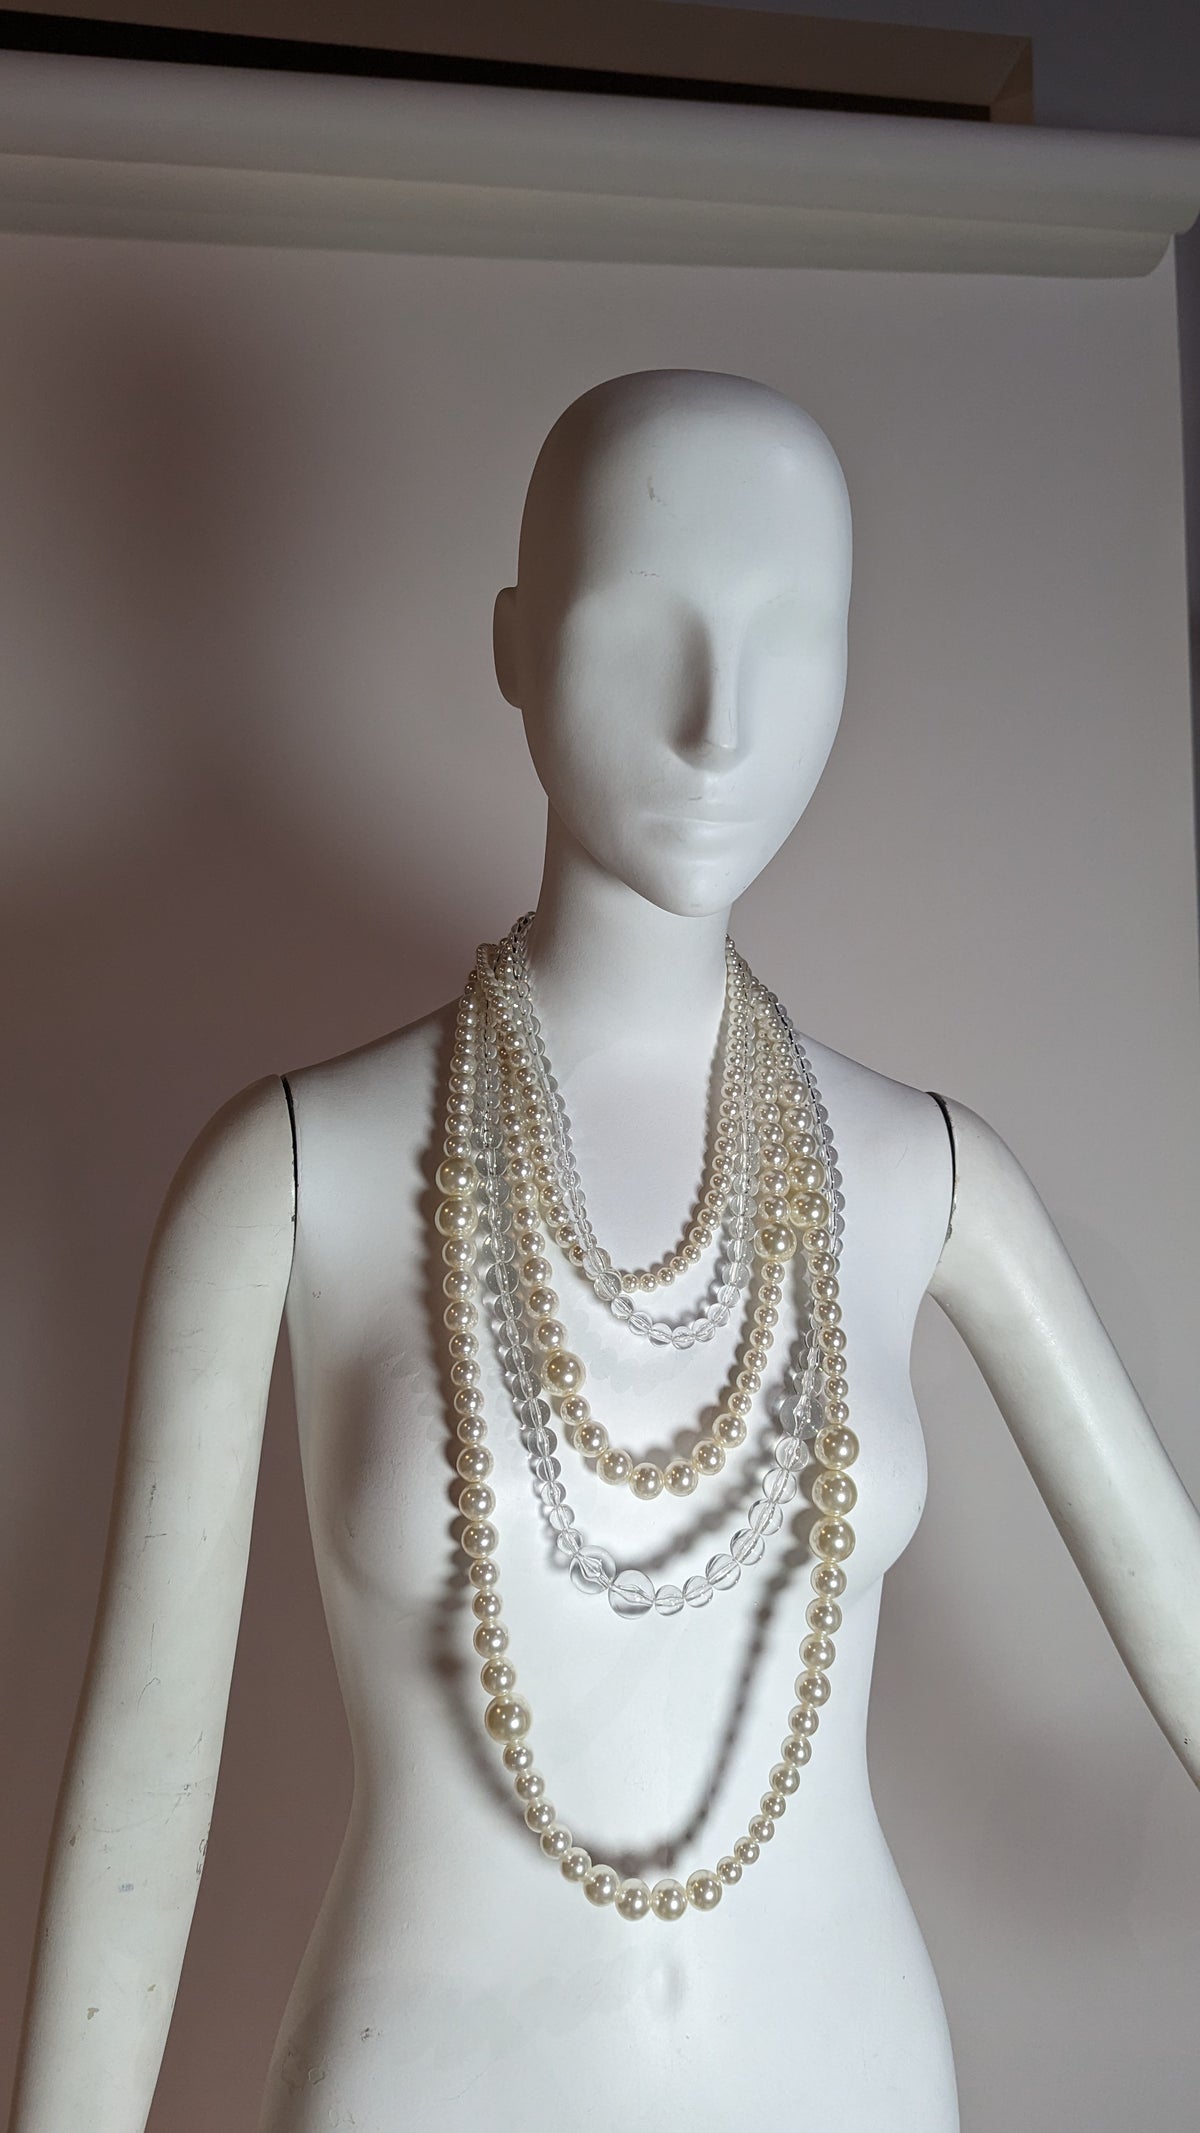 SAMPLE SALE - Fake Pearl Necklace - FINAL SALE